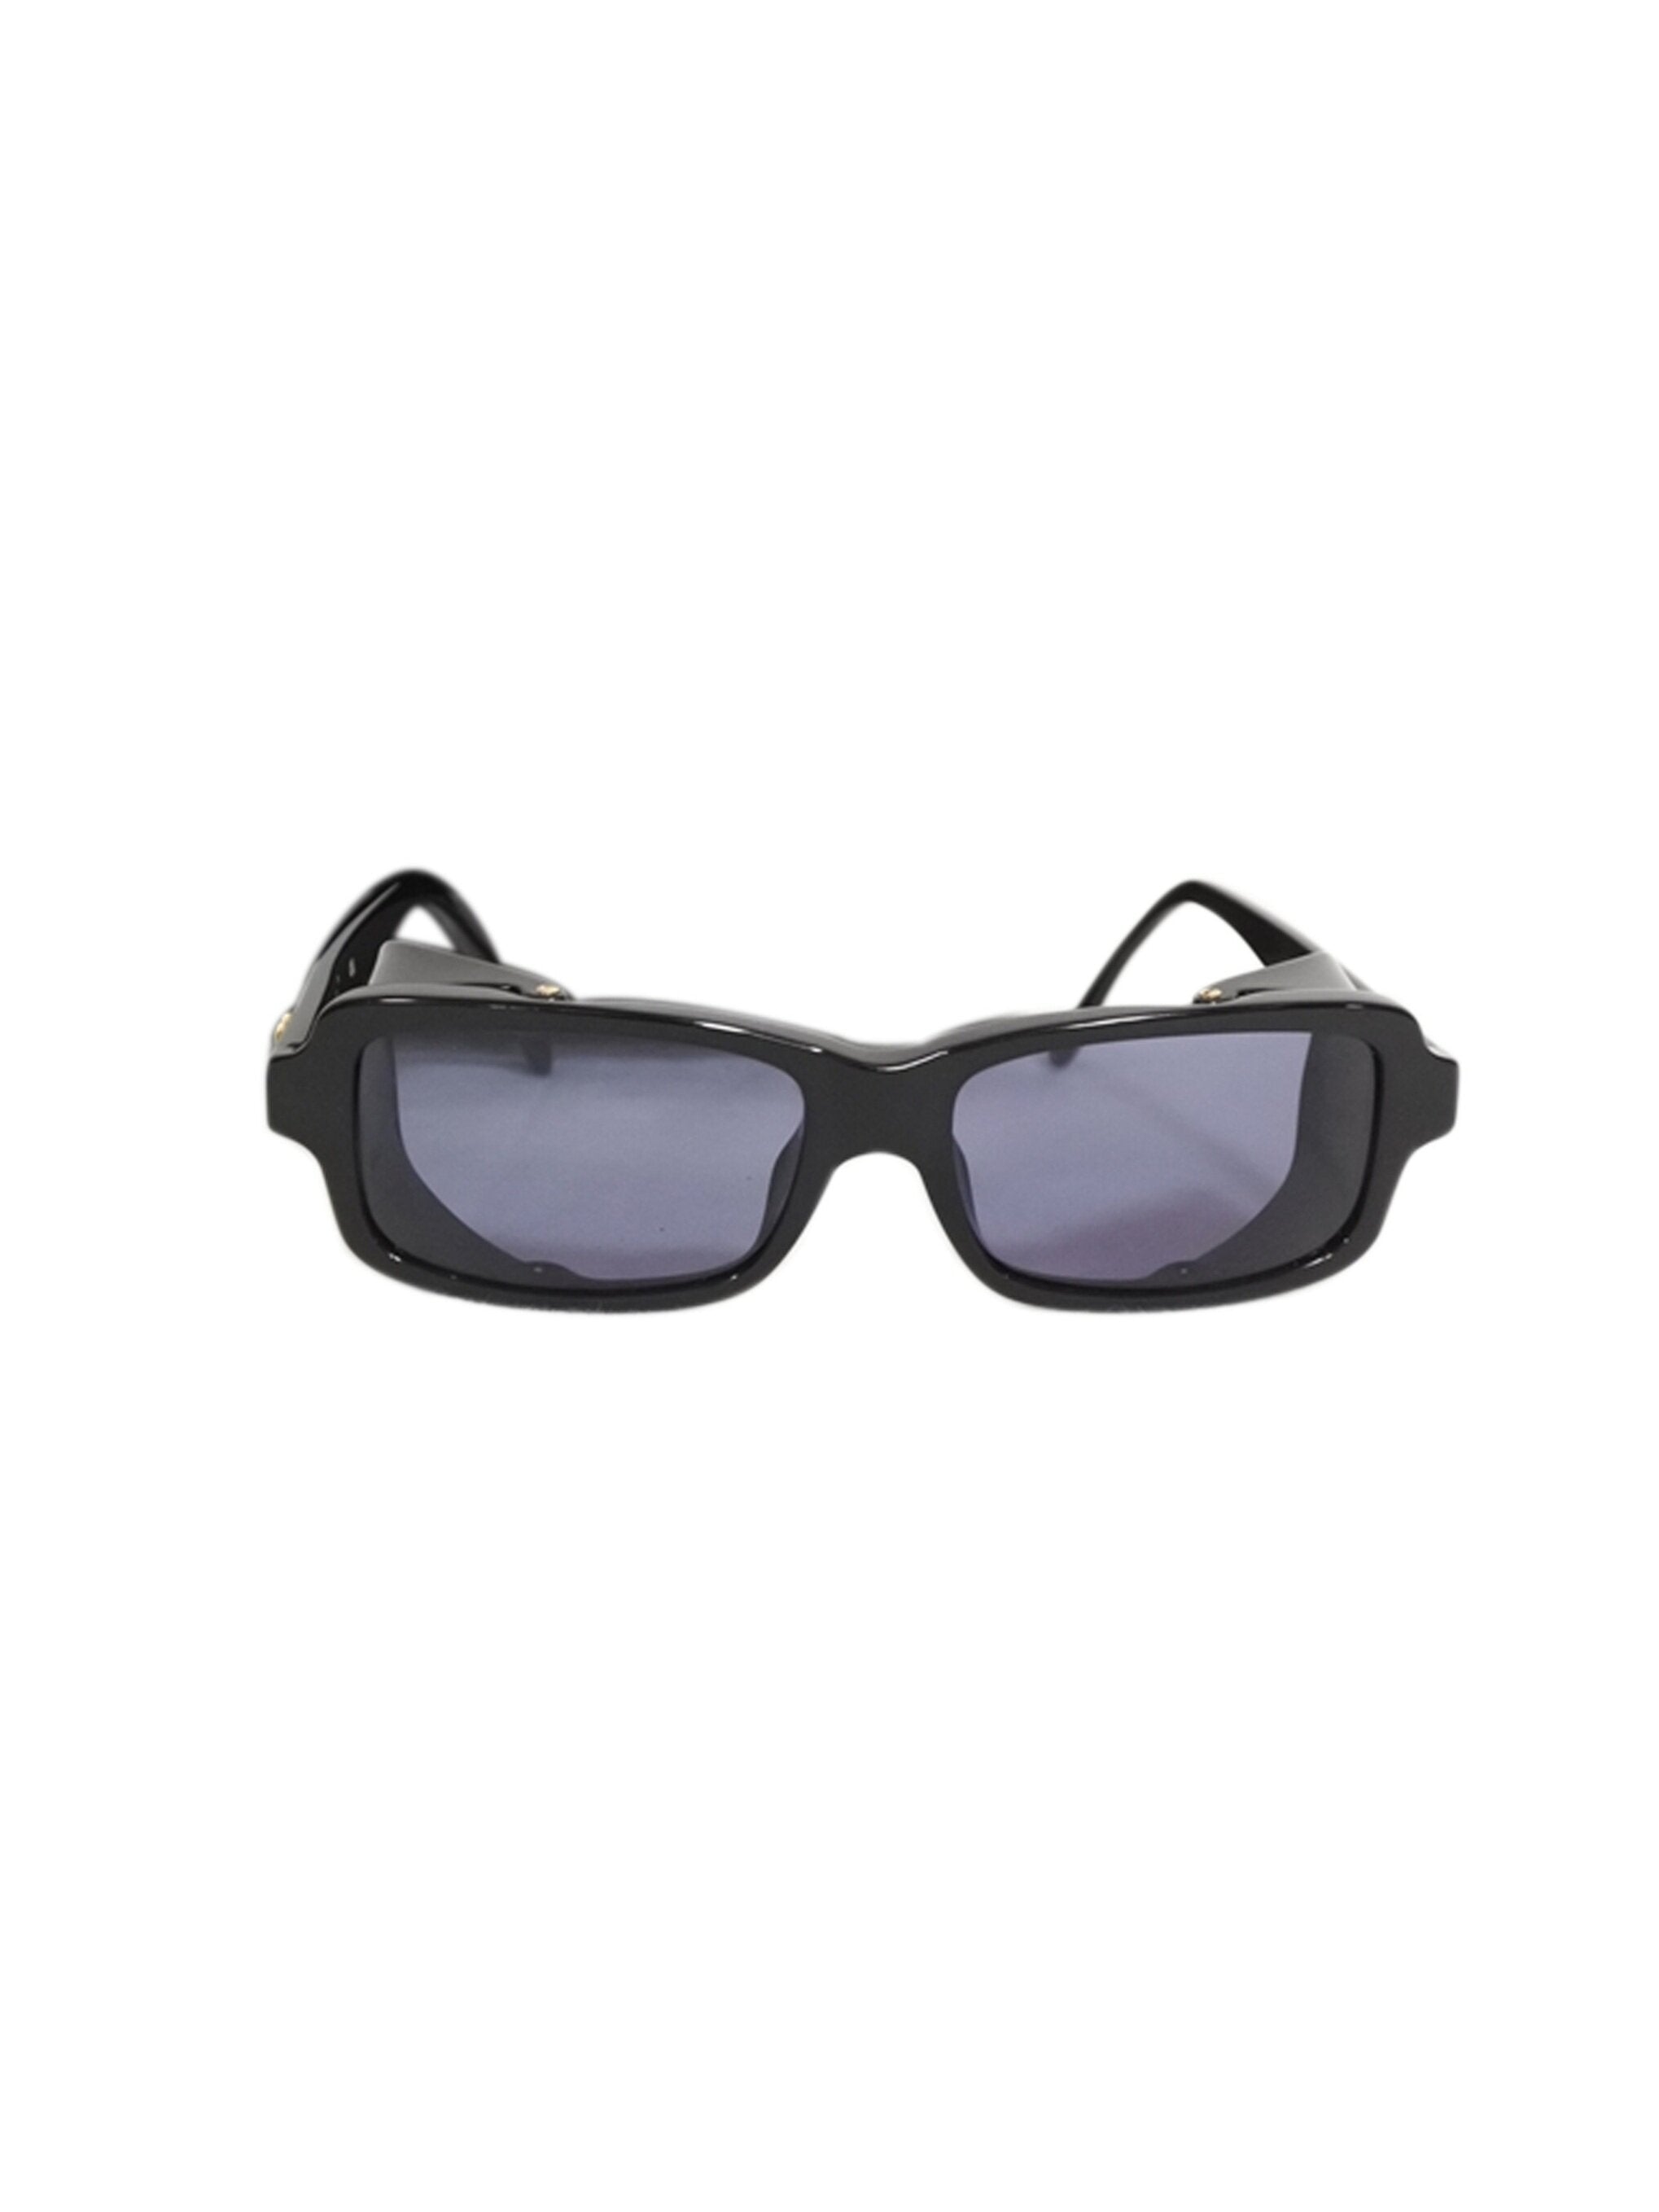 Chanel 2000s Black and Purple Rare Visor Sunglasses